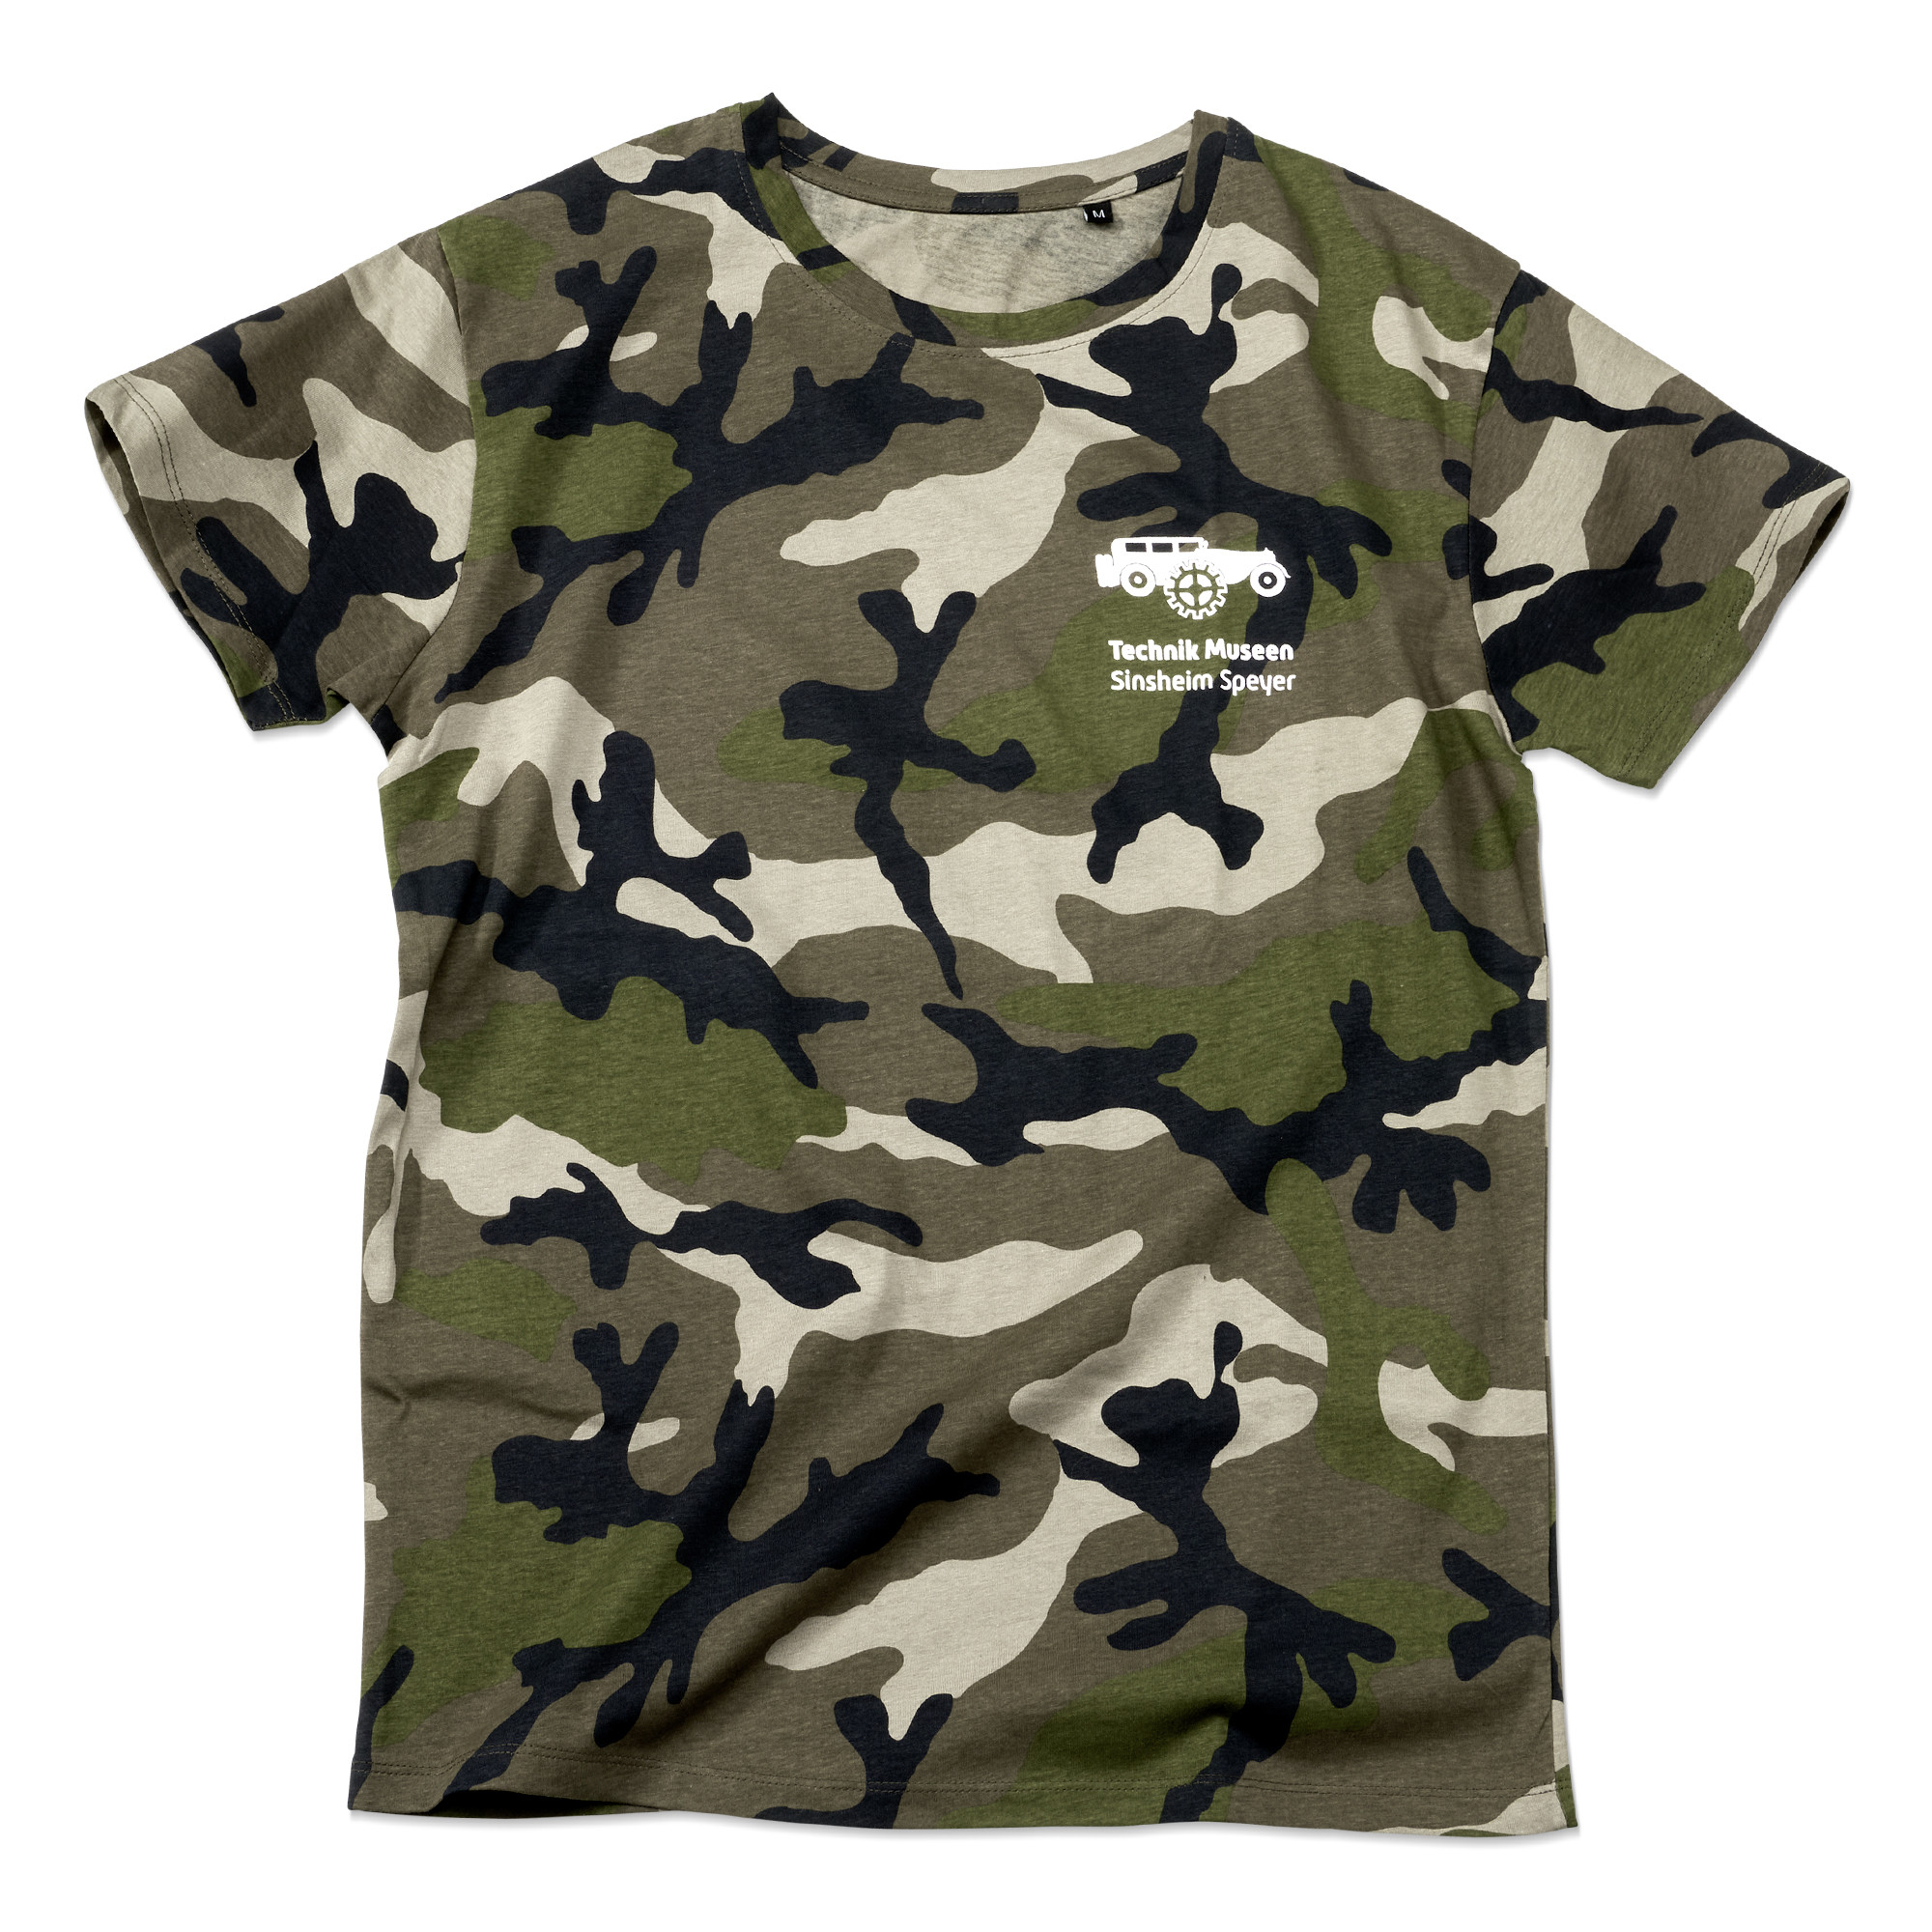 Camouflage T-Shirt - Technik Museen Sinsheim Speyer 